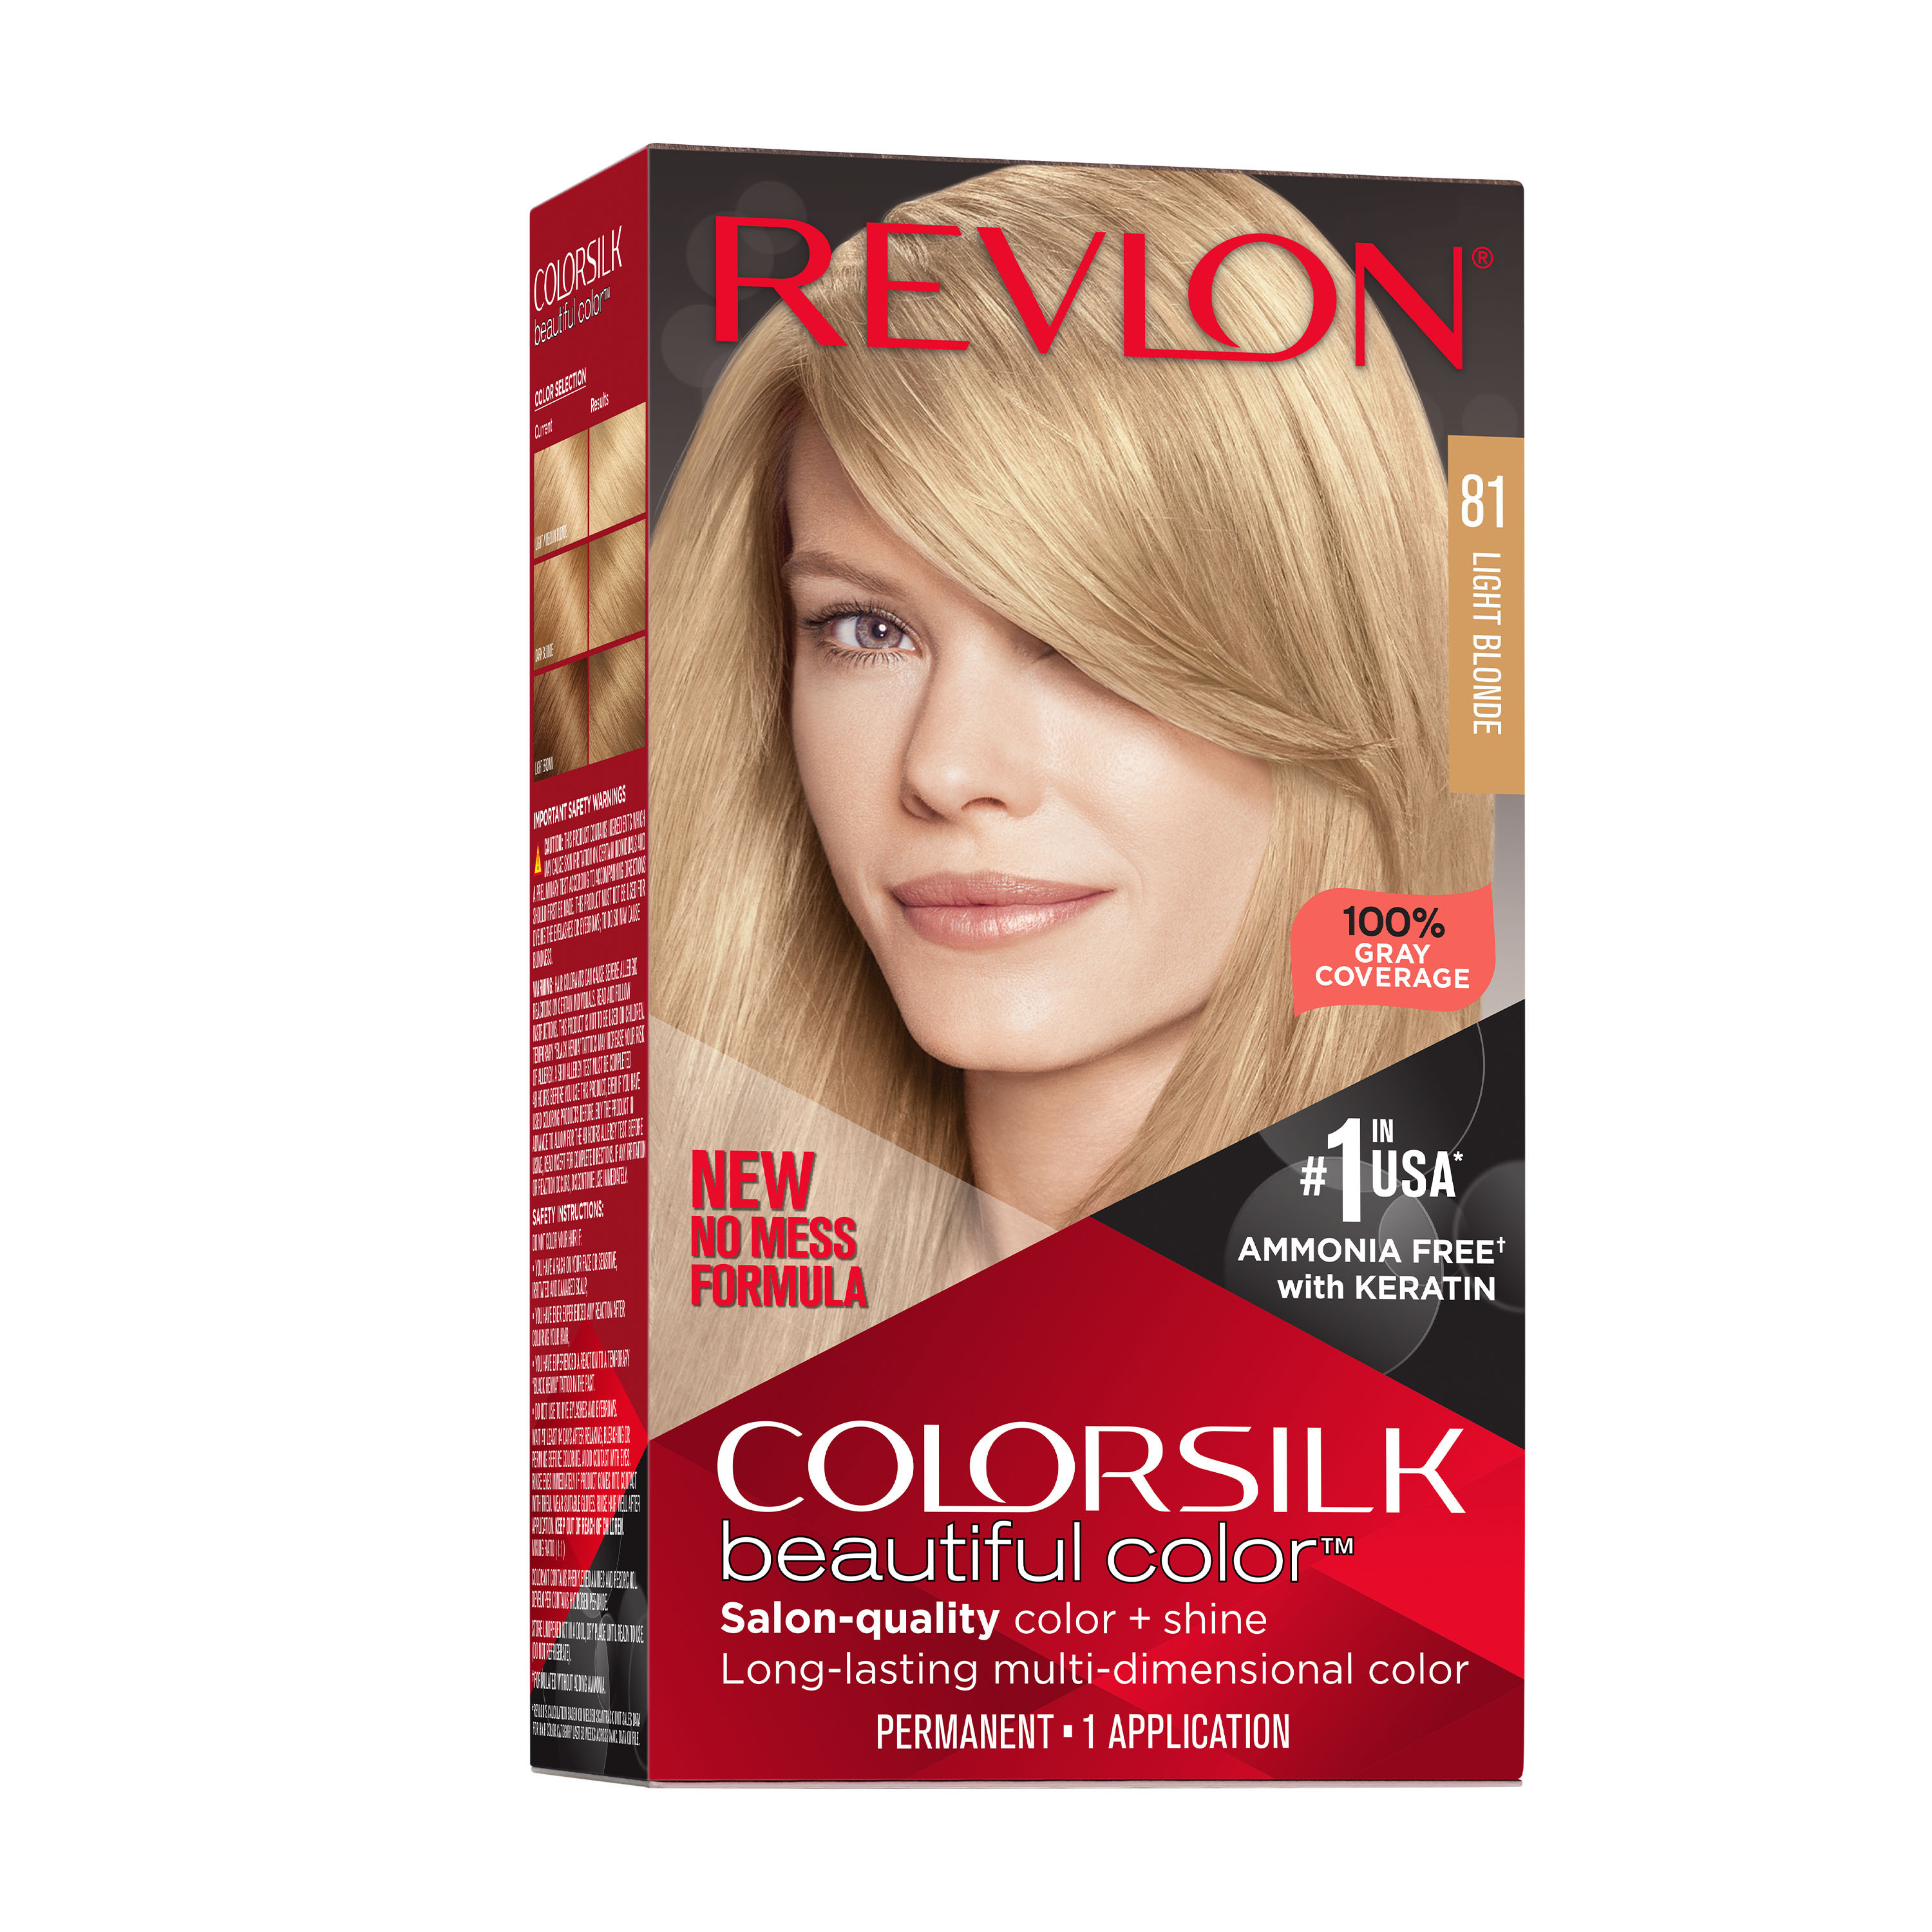 NEW Revlon Colorsilk Beautiful Permanent Hair Color, No Mess Formula,  081 Light Blonde, 1 Pack - image 1 of 14